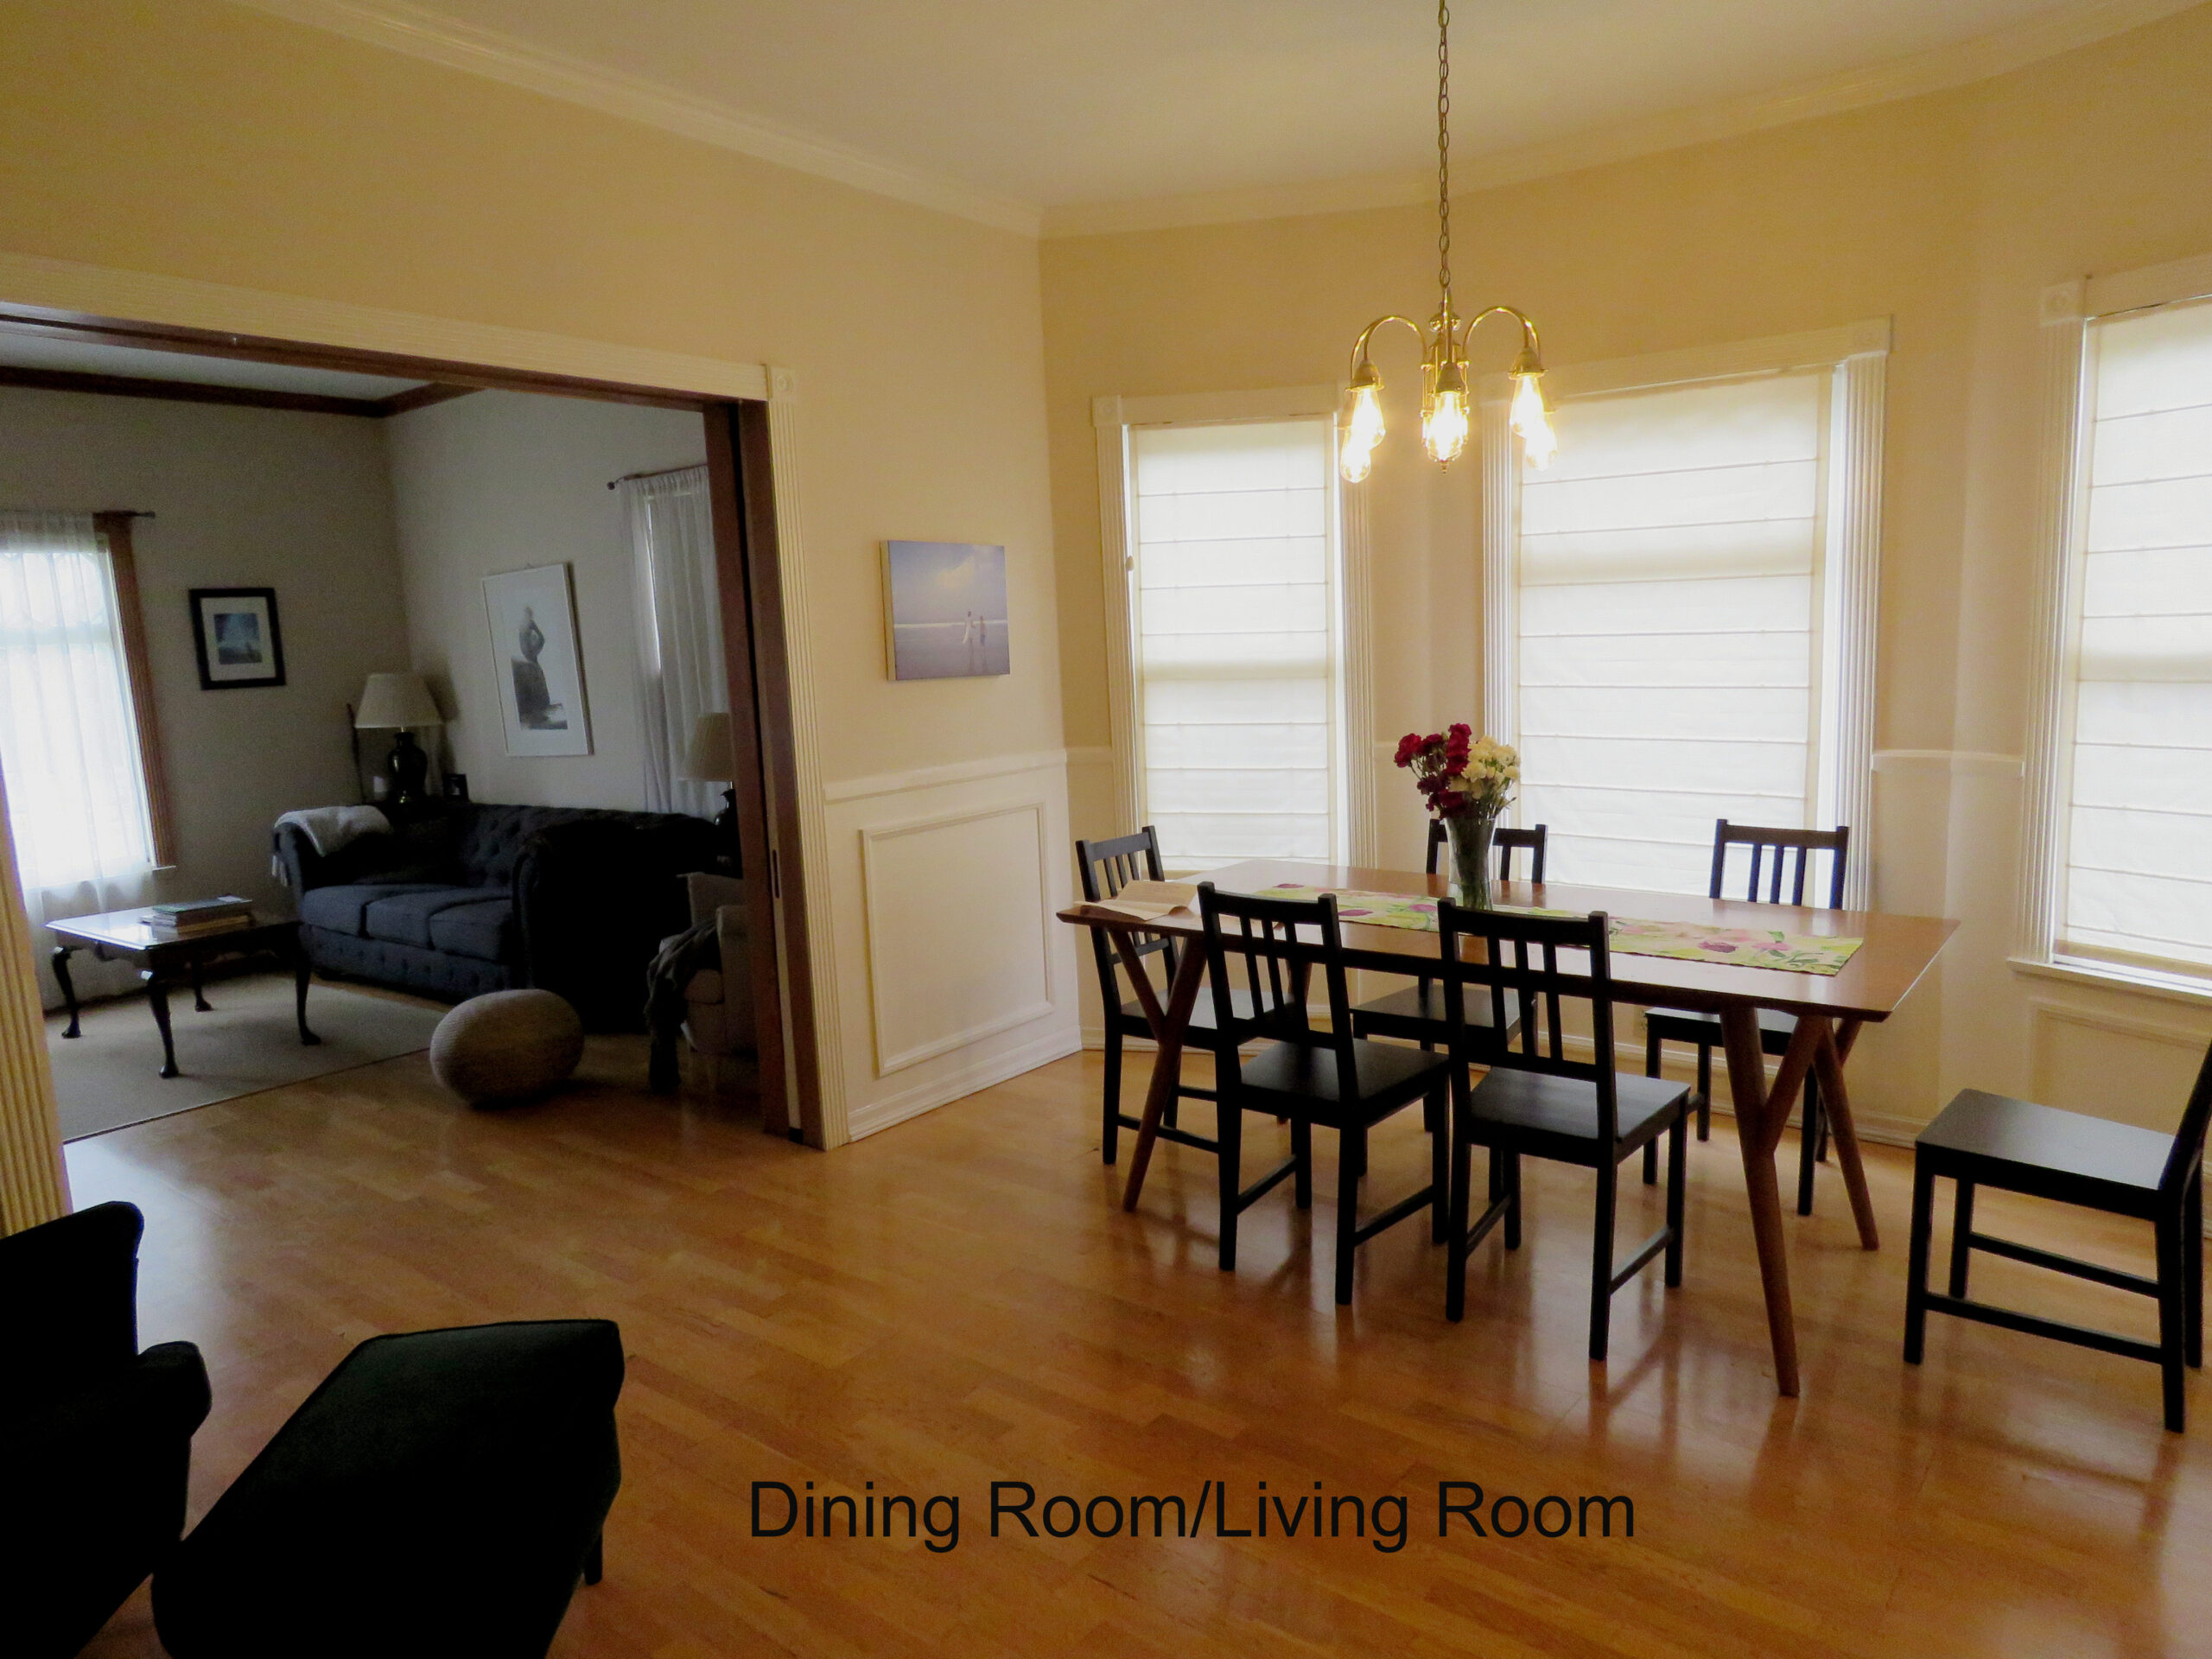 Dining Room/Living Room